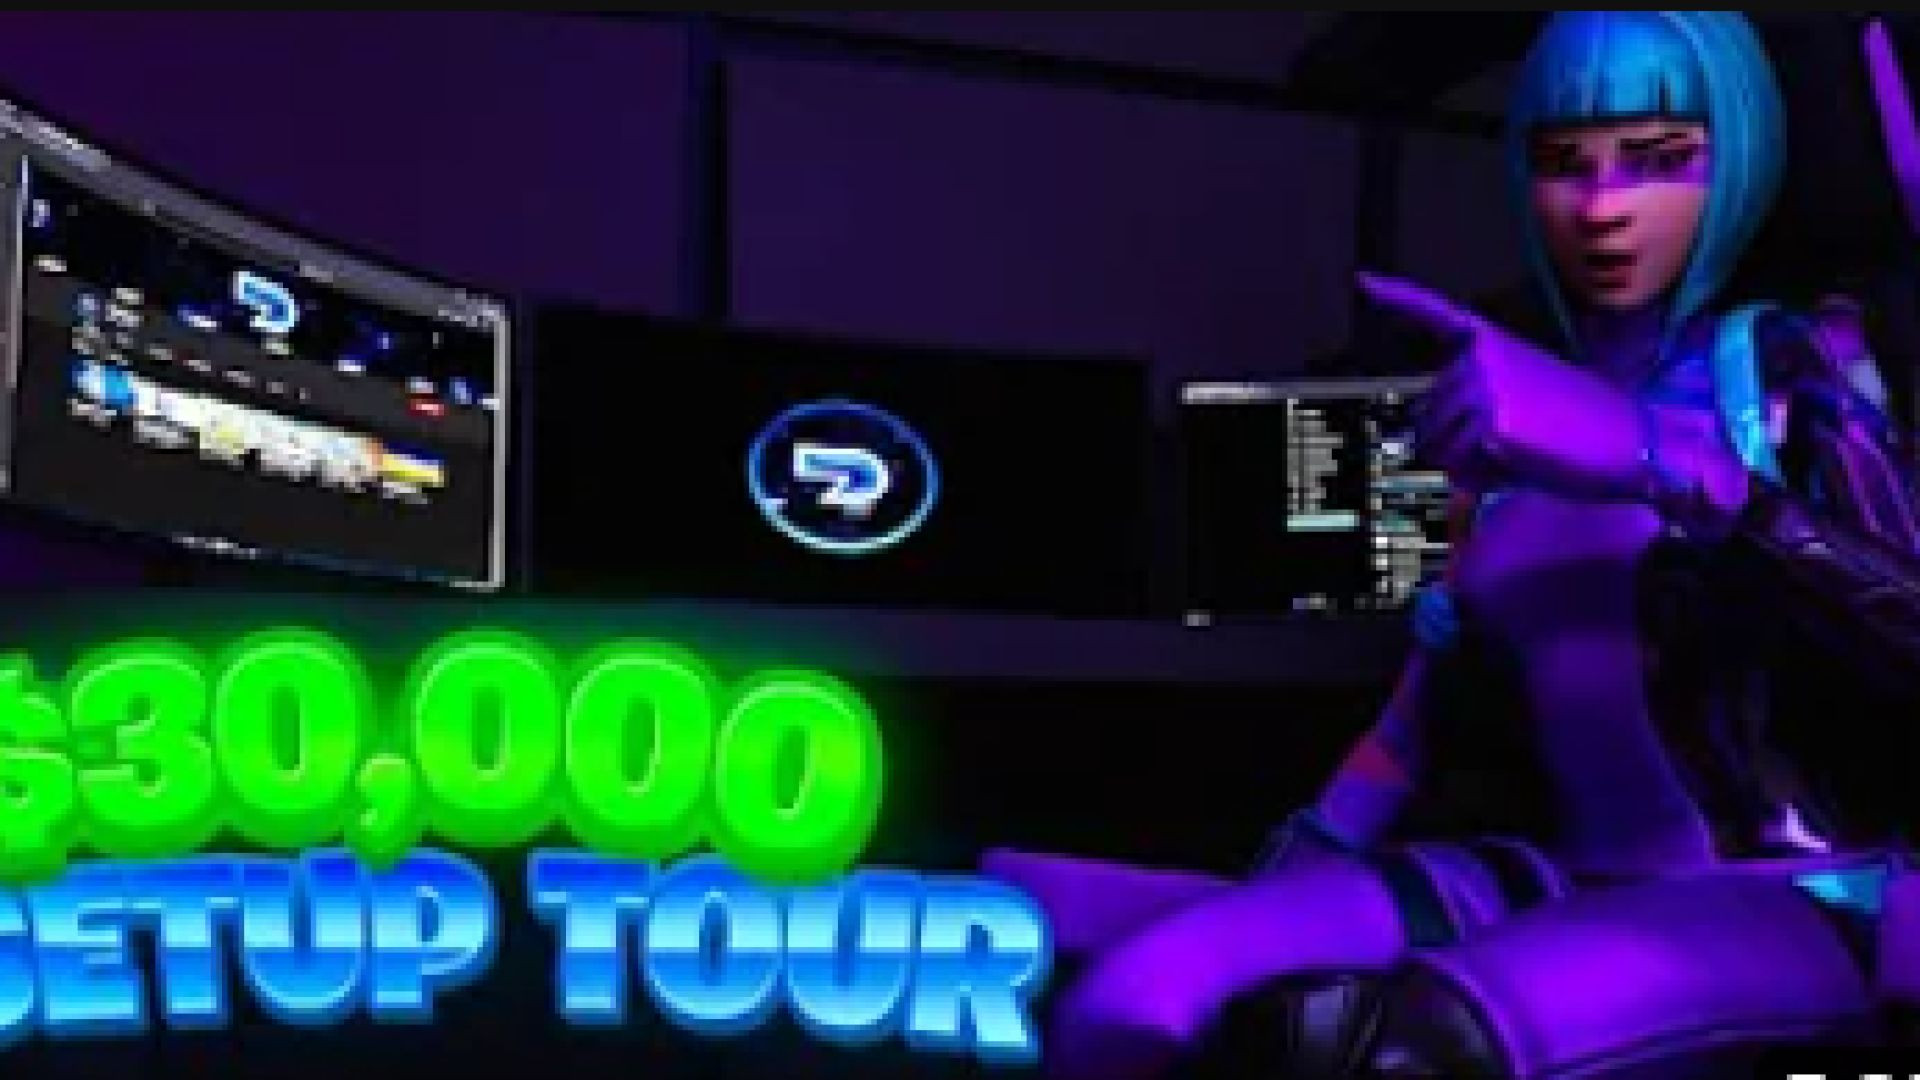 Division 7 Gaming Setup Tours! ($30,000)